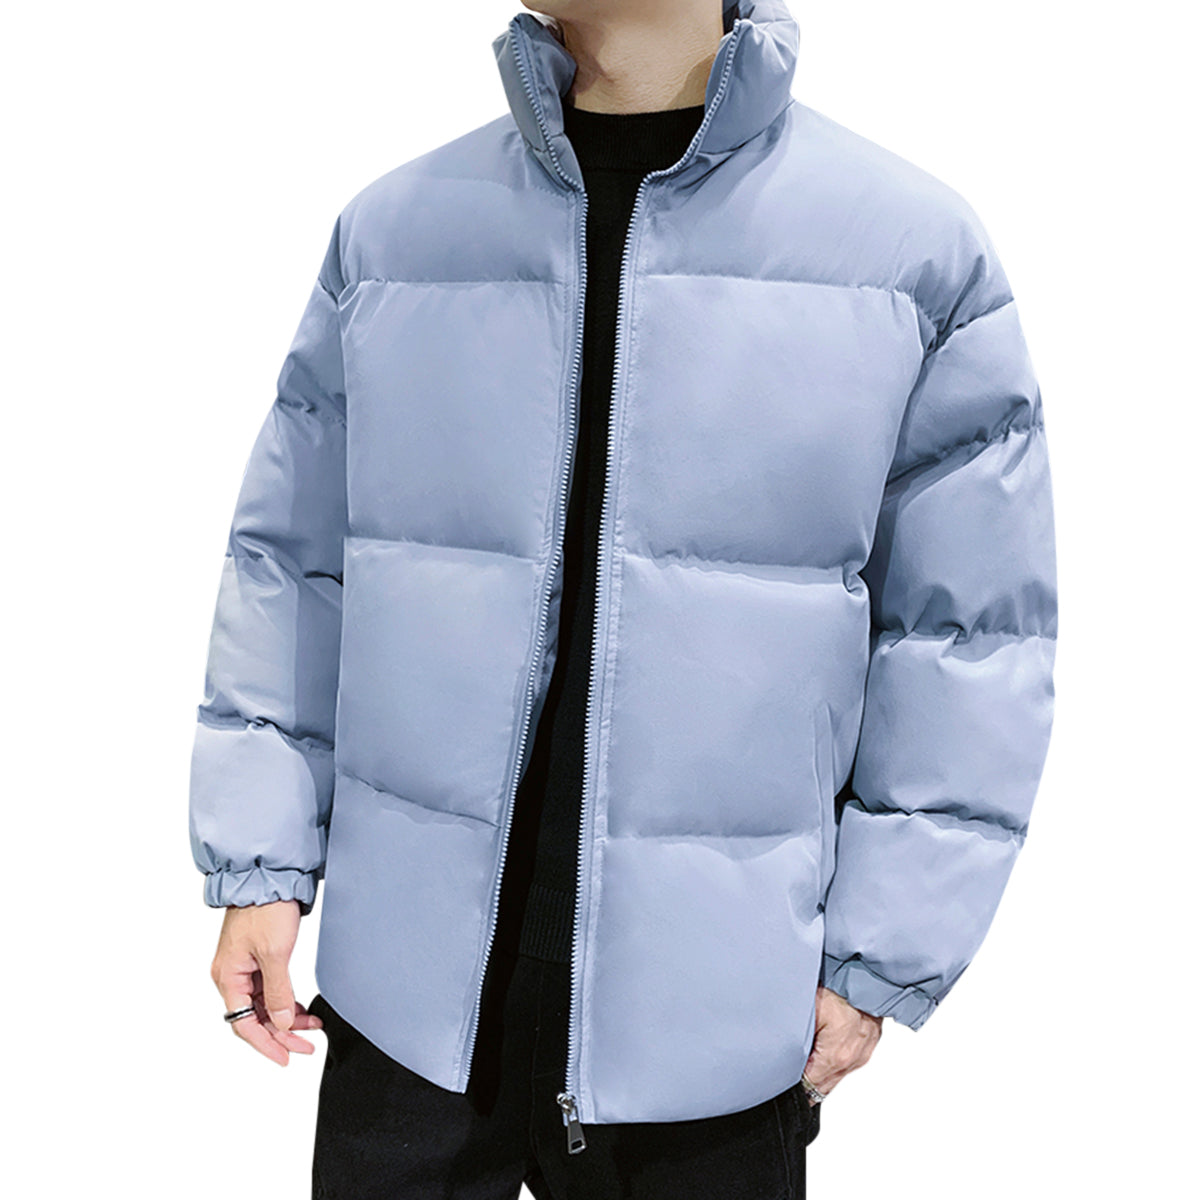 Men's Solid Color Stand Collar Cotton Coat Blue